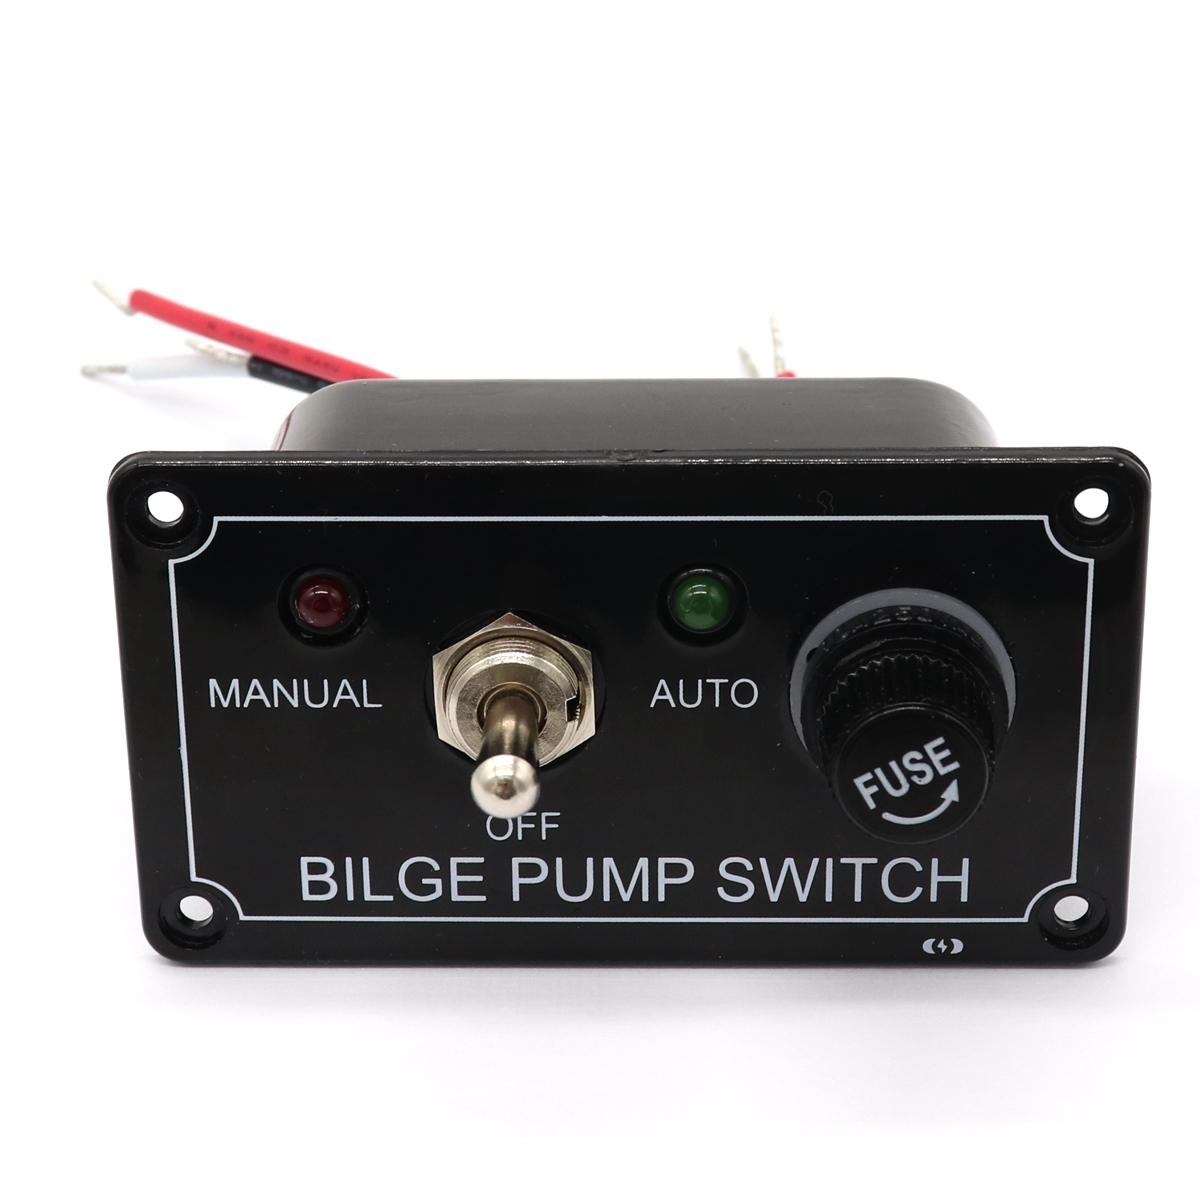 12V LED Indicator Bilge Pump Switch 3 Way Panel MANUAL OFF AUTO For Marine